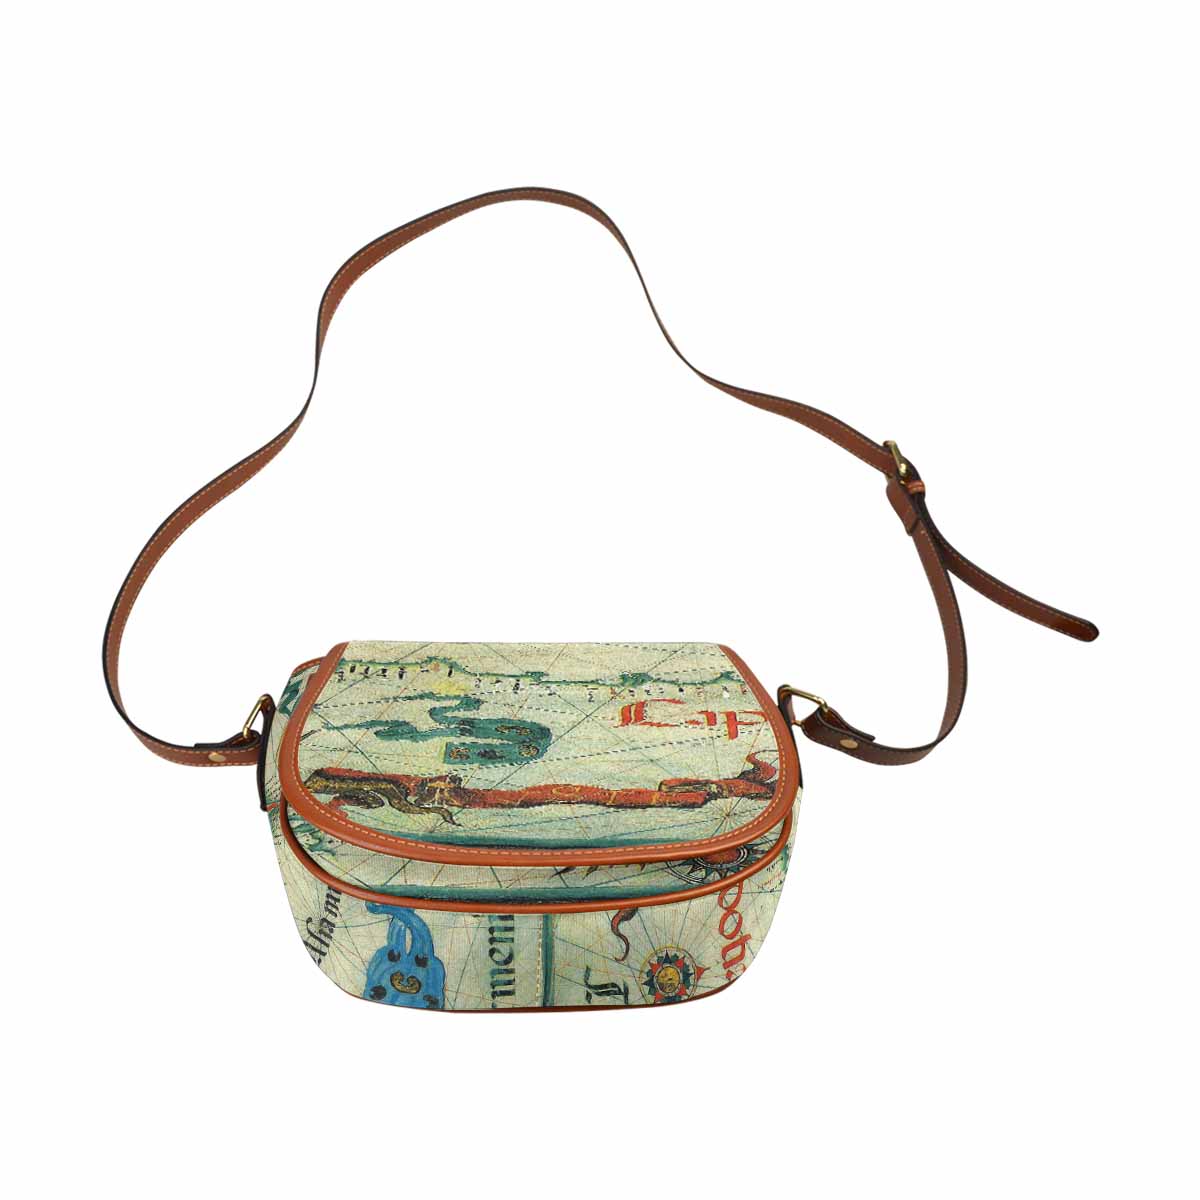 Antique Map design Handbag, saddle bag, Design 33